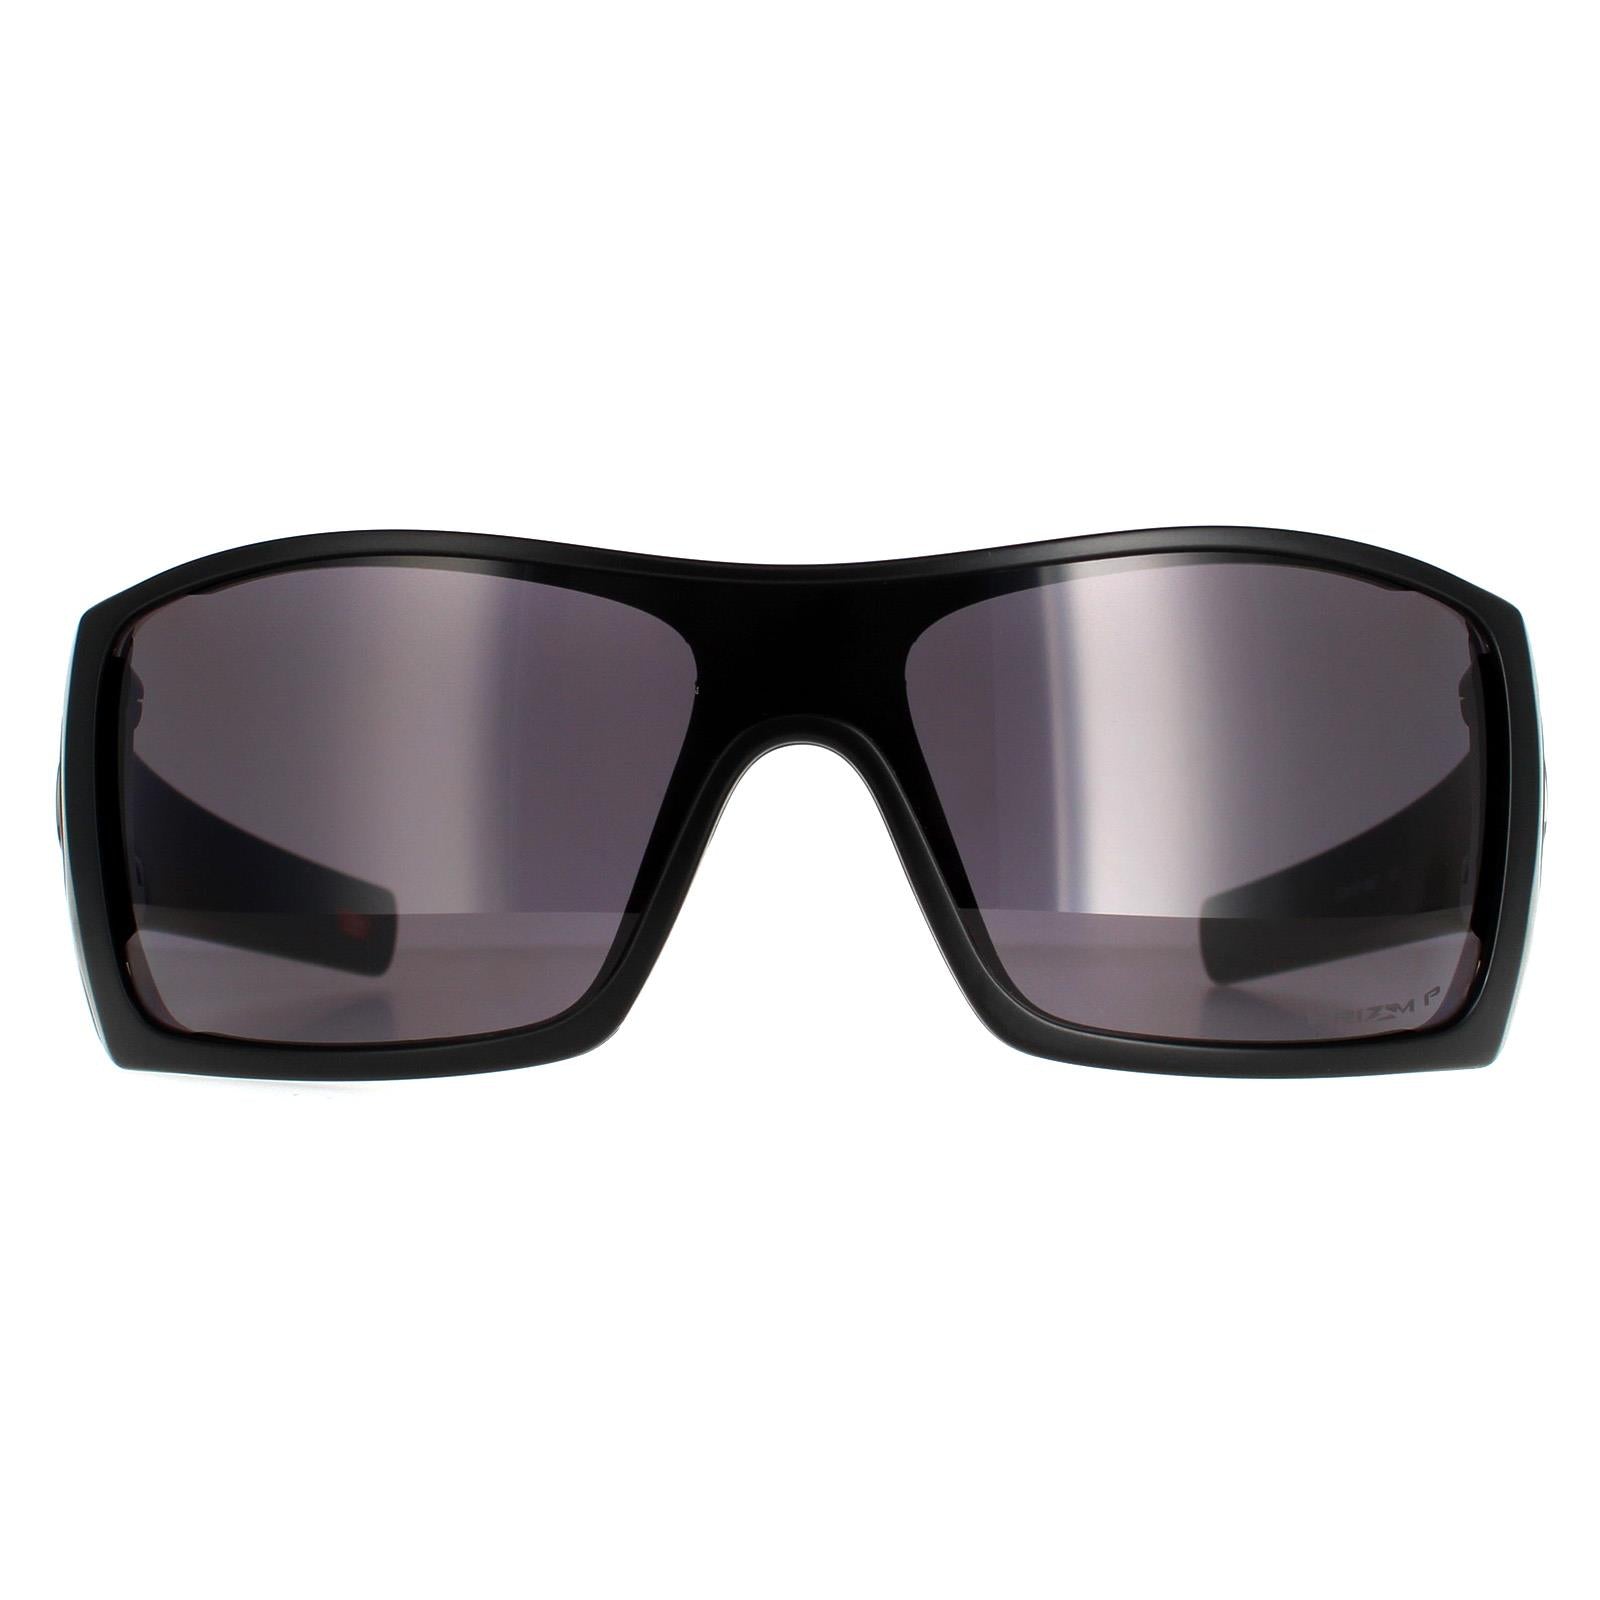 Cheap Oakley Sunglasses On Sale Online - Satin Black Frame Deadbolt Narrow  - Adjustable Nosepads